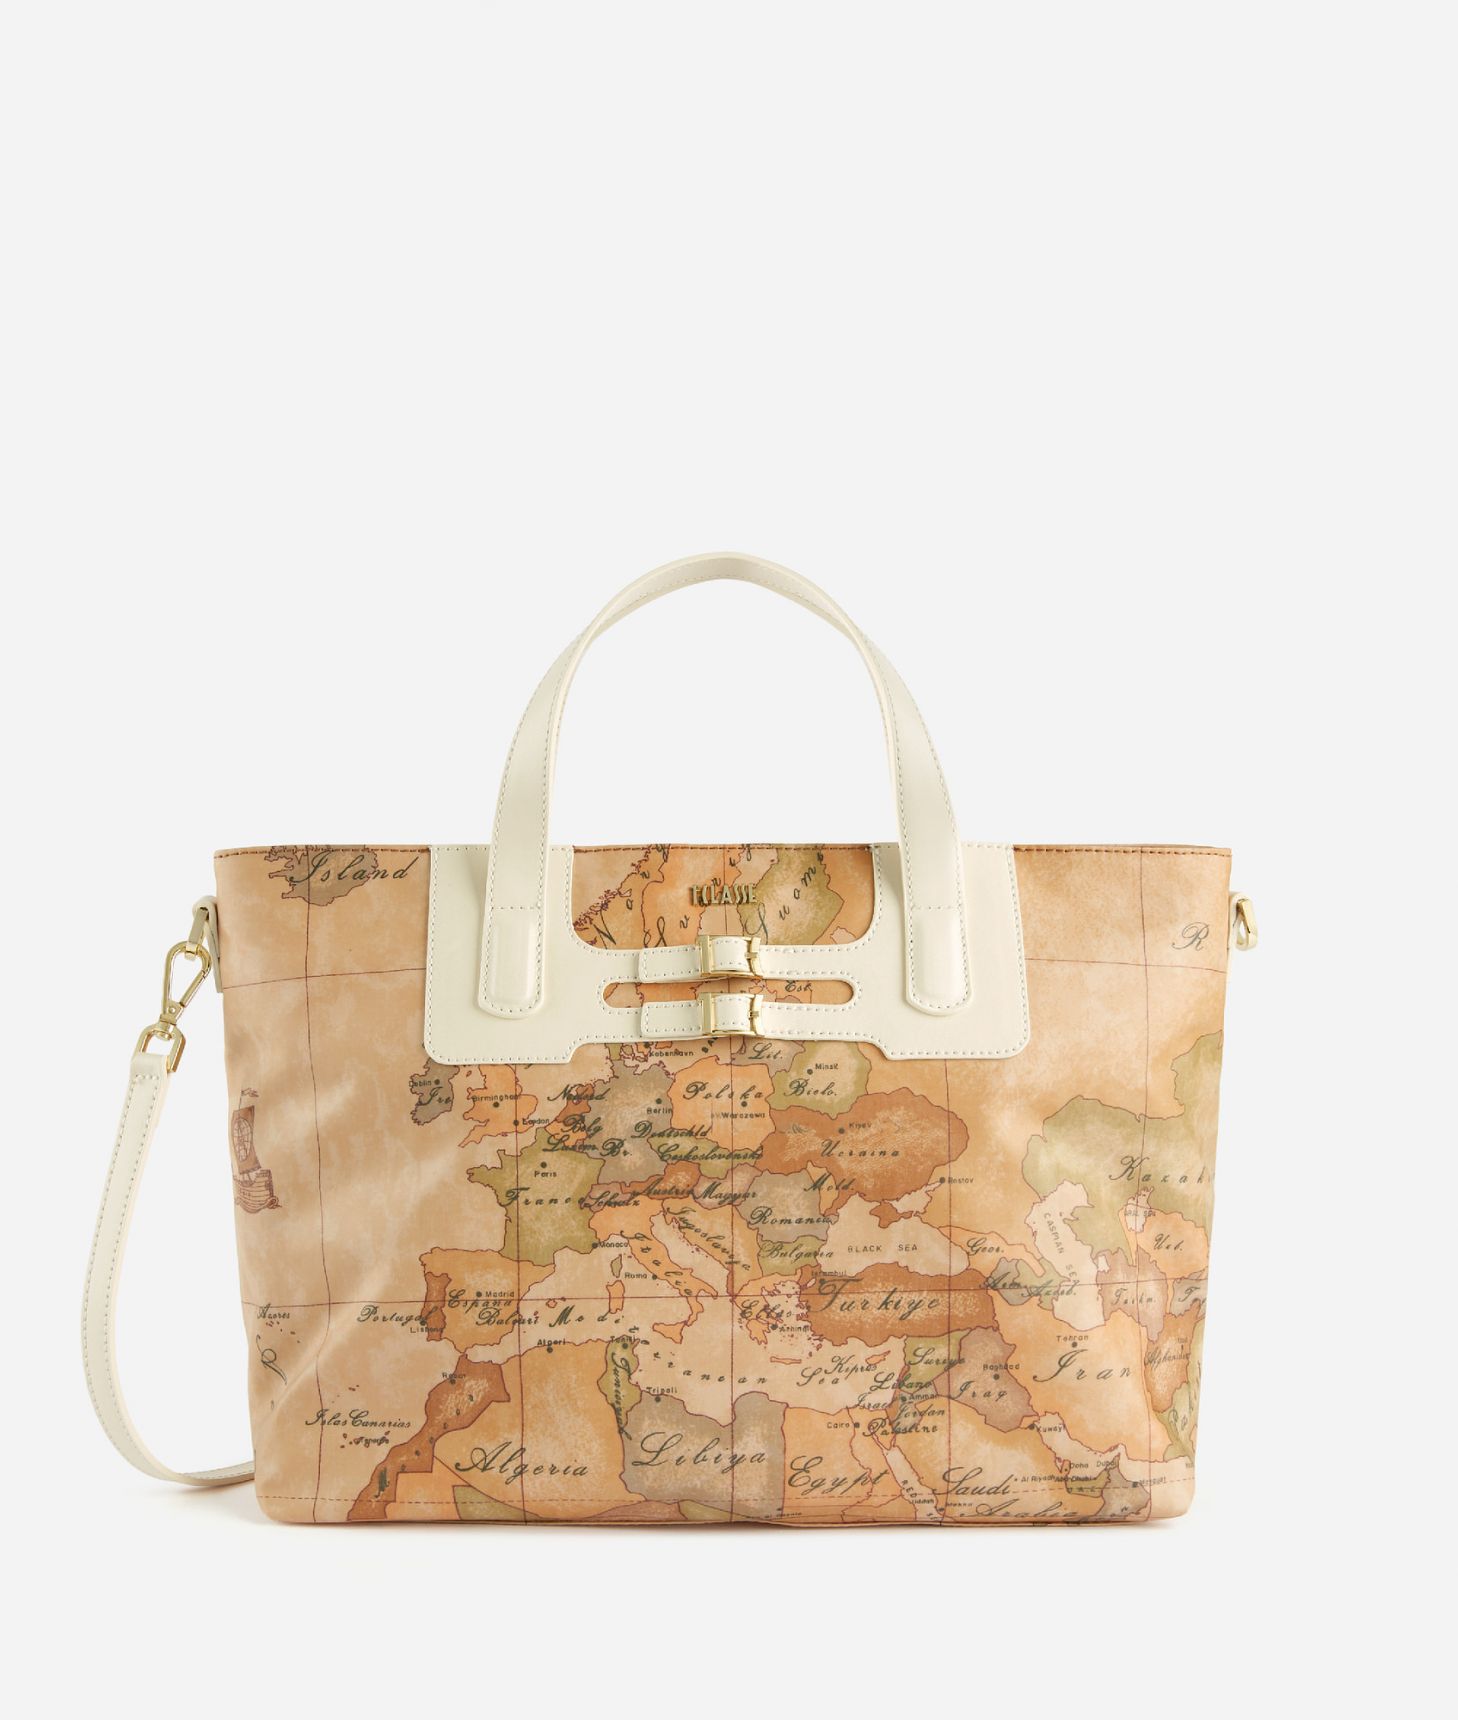 Soft Atlantic handbag with crossbody strap Ivory,front